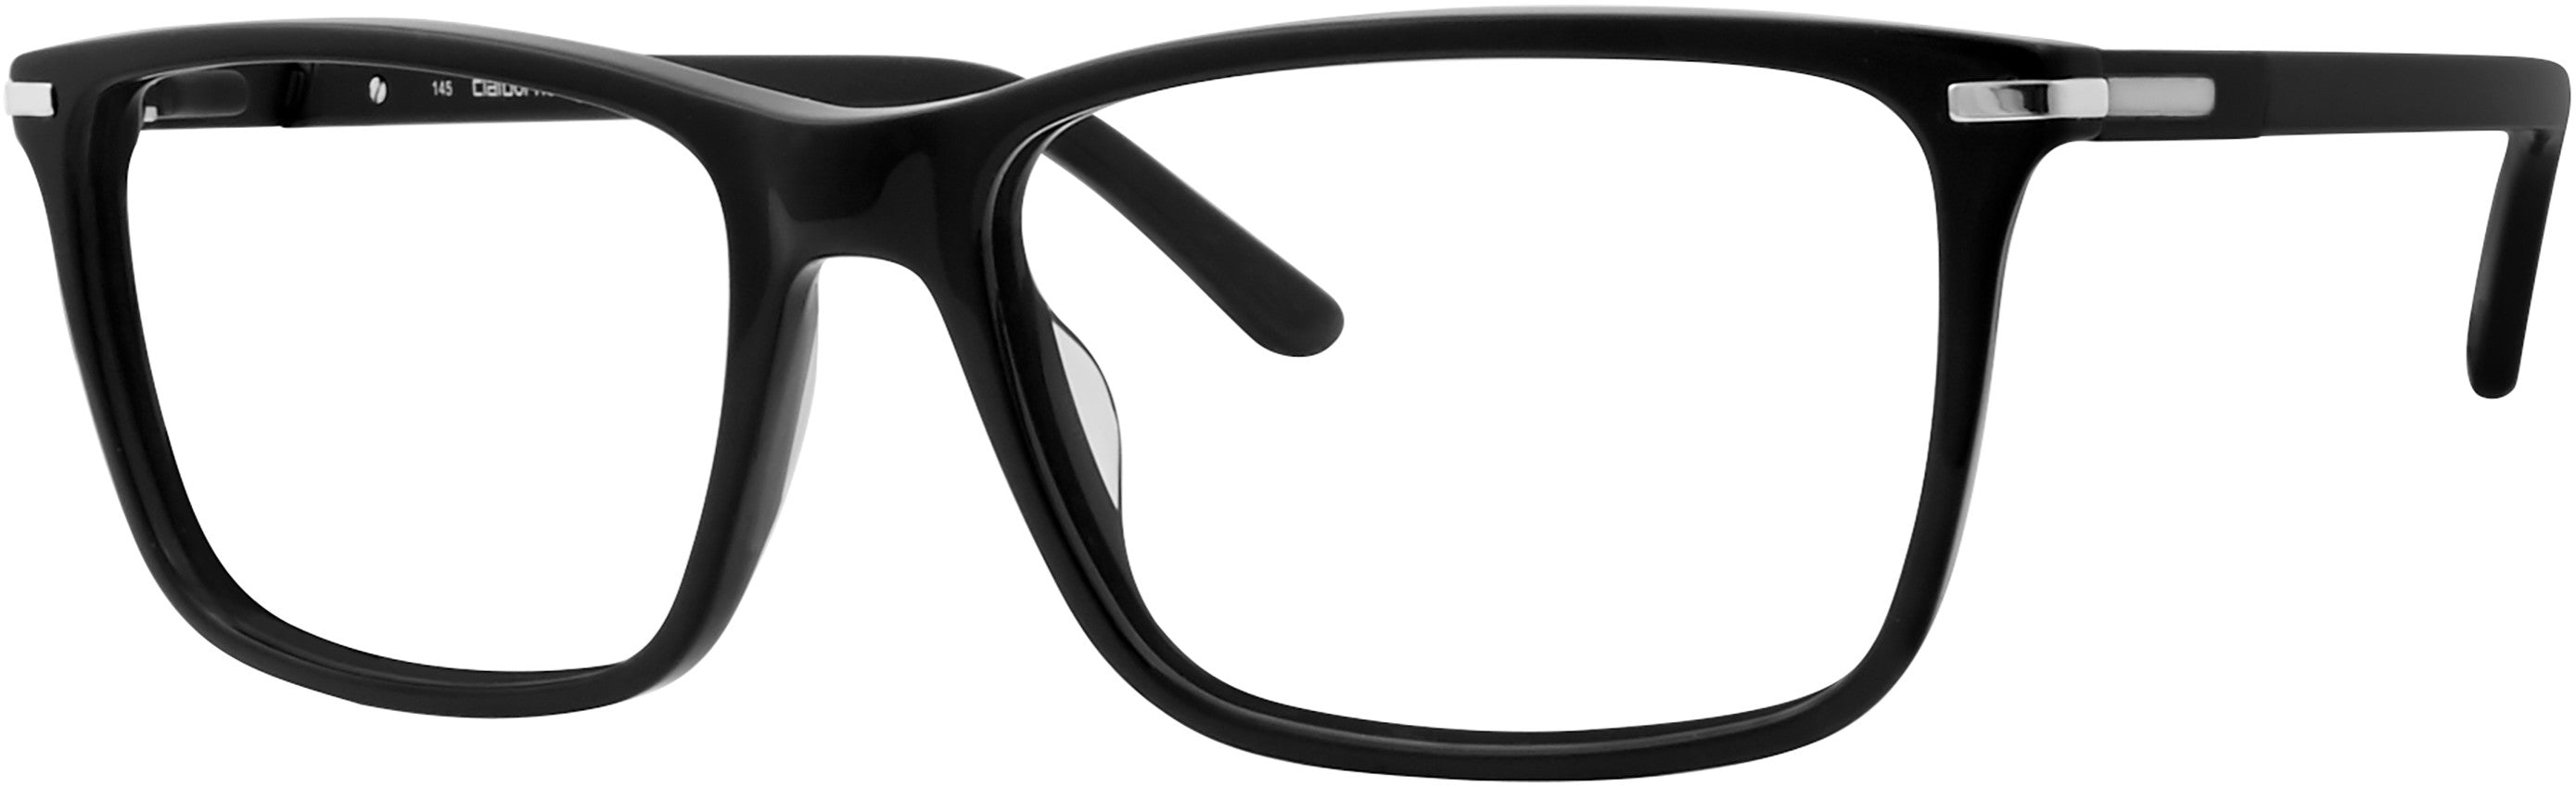  Claiborne 318 Rectangular Eyeglasses 0807-0807  Black (00 Demo Lens)